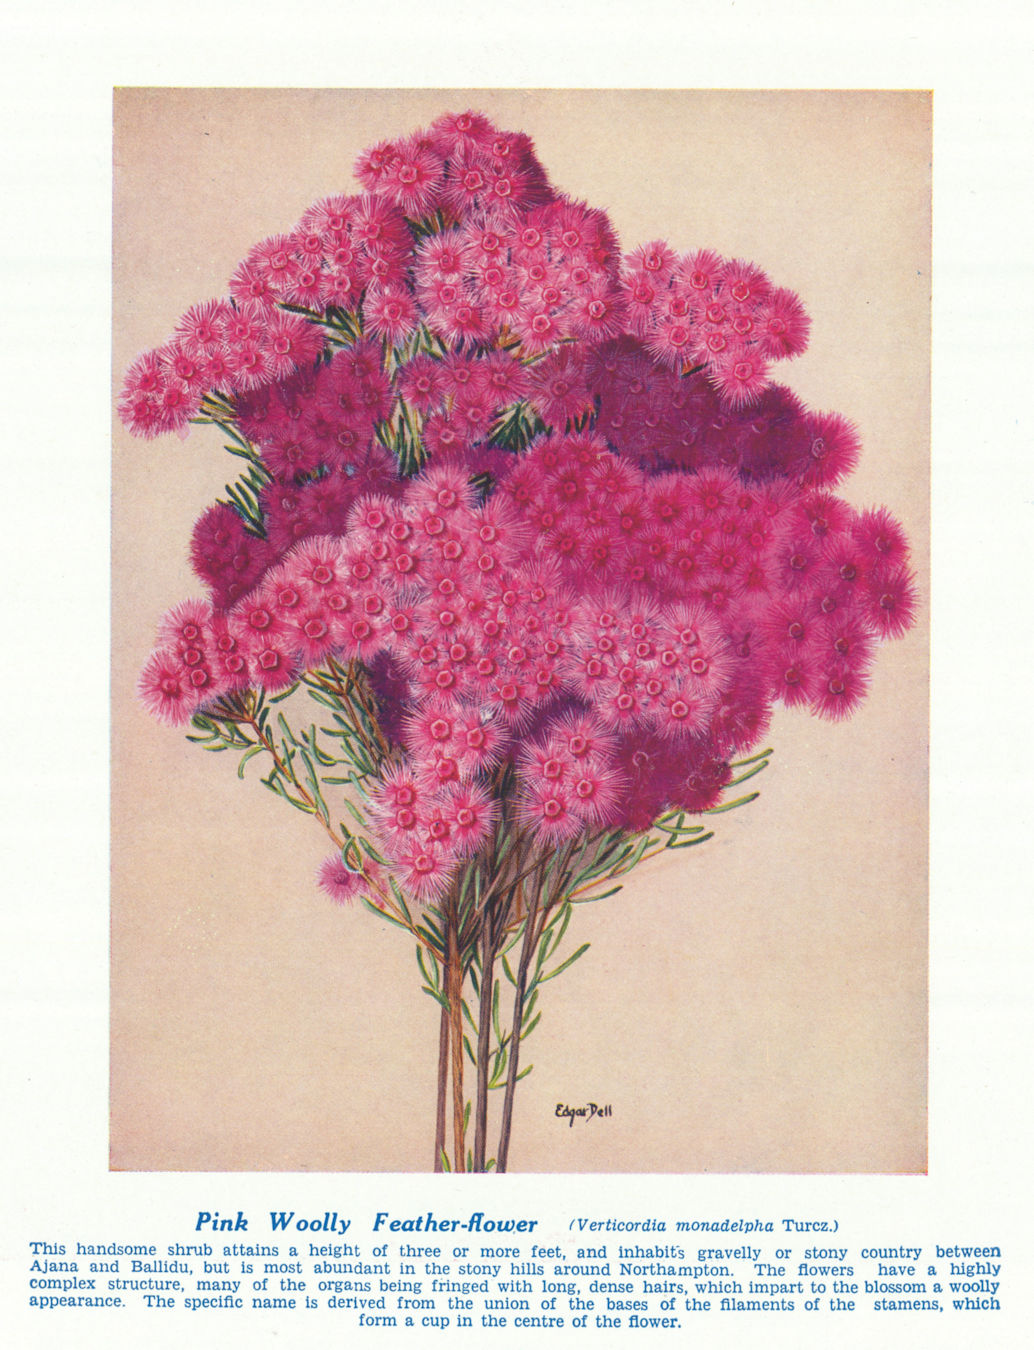 Associate Product Pink Woolly Feather-flower (Verticordia monadelpha). Australian Wild Flower 1950